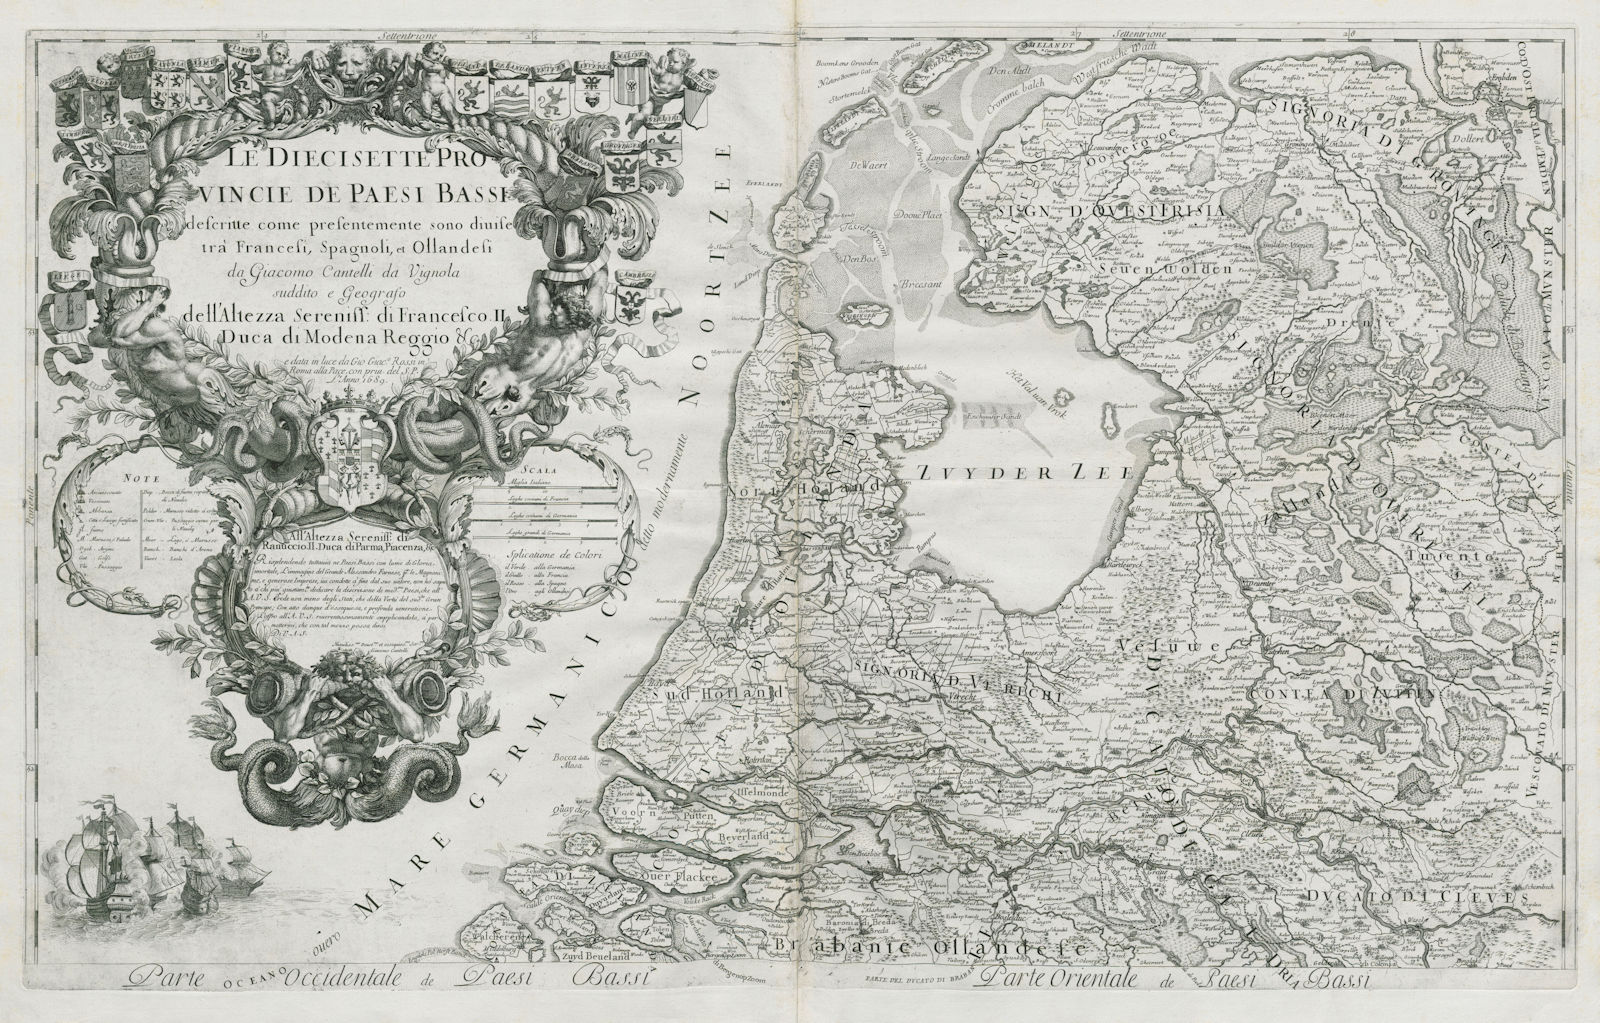 Le Diecisette Provincie de Paesi Bassi. Netherlands. ROSSI / CANTELLI 1689 map